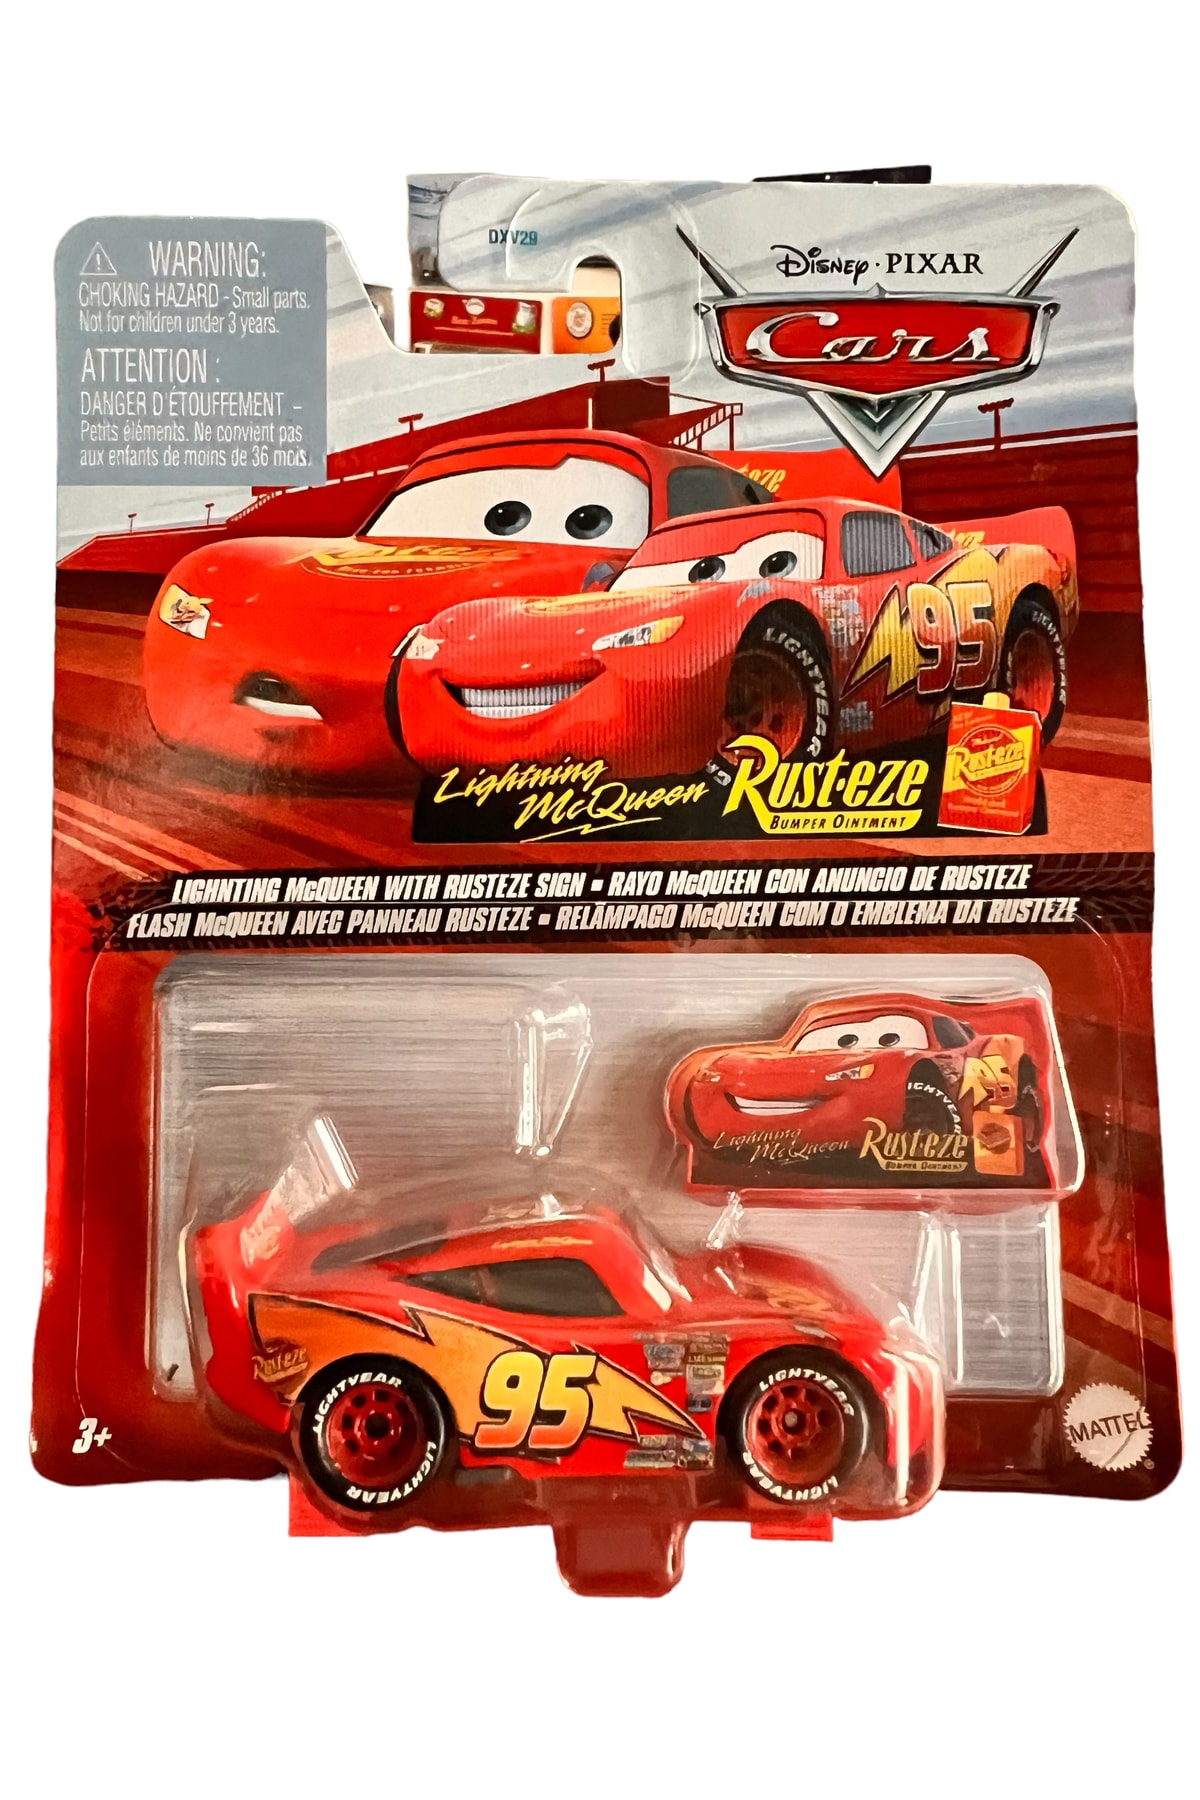 Pixar Cars Disney Cars Lightning Şimşek Mcqueen